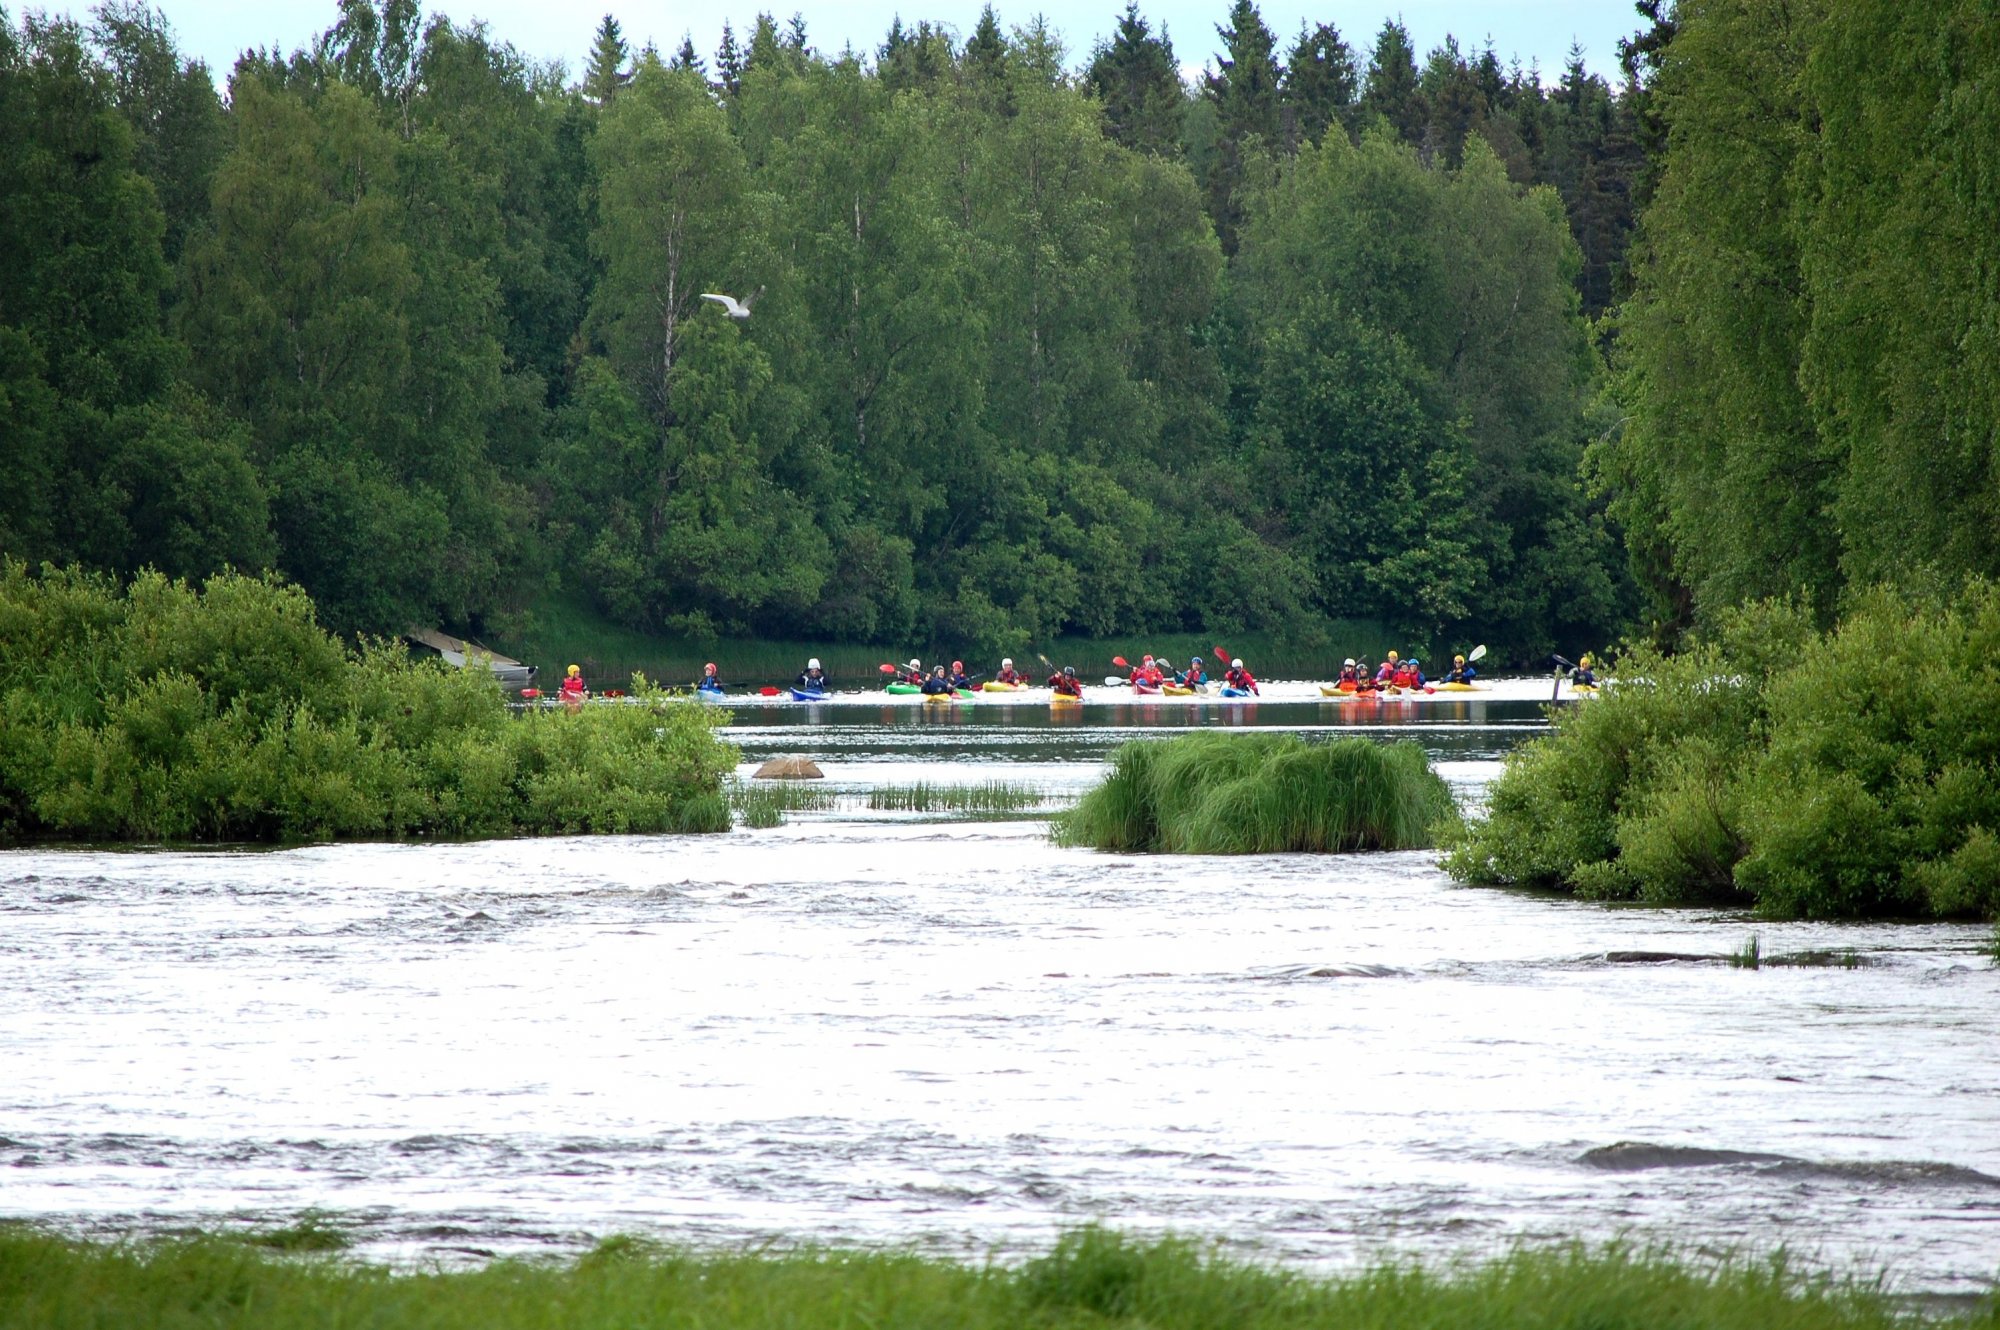 Kayakers in the Pyhäjoki River